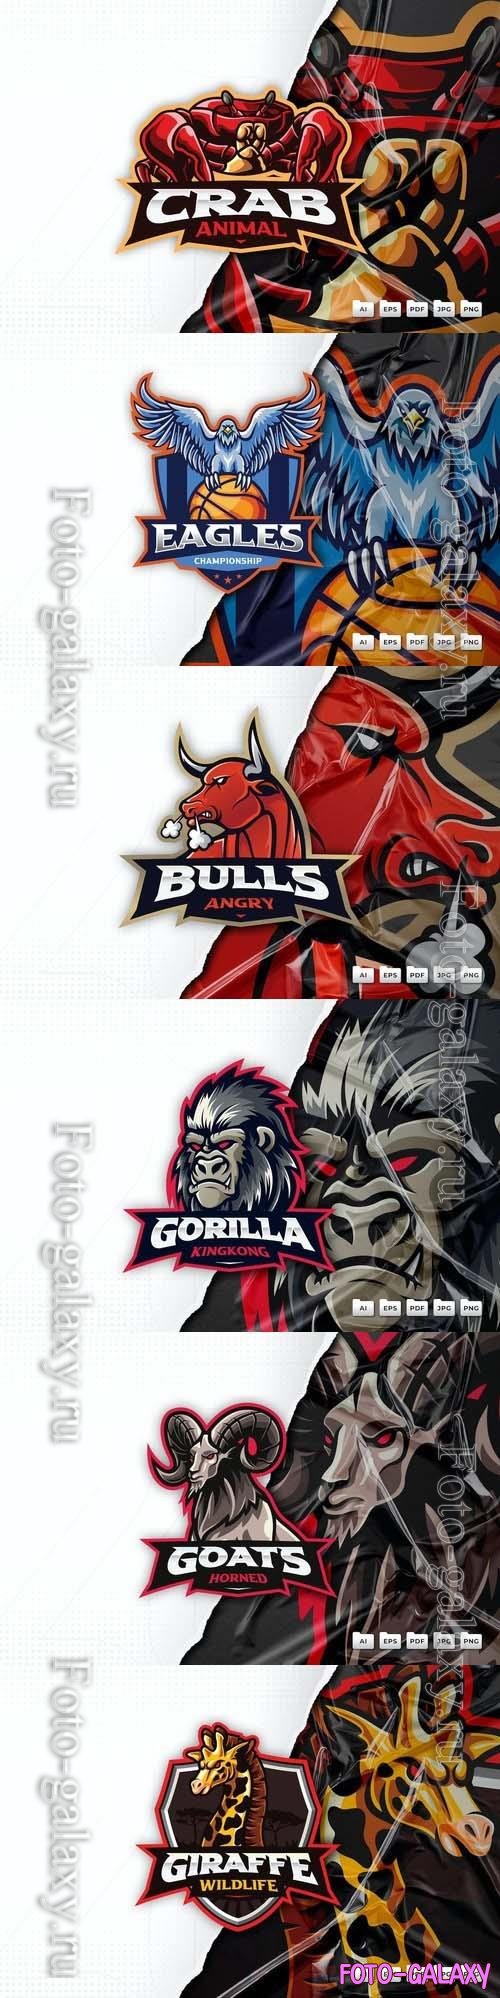 Gorilla, goat, giraffe, eagle, crab, bull, mascot logo design